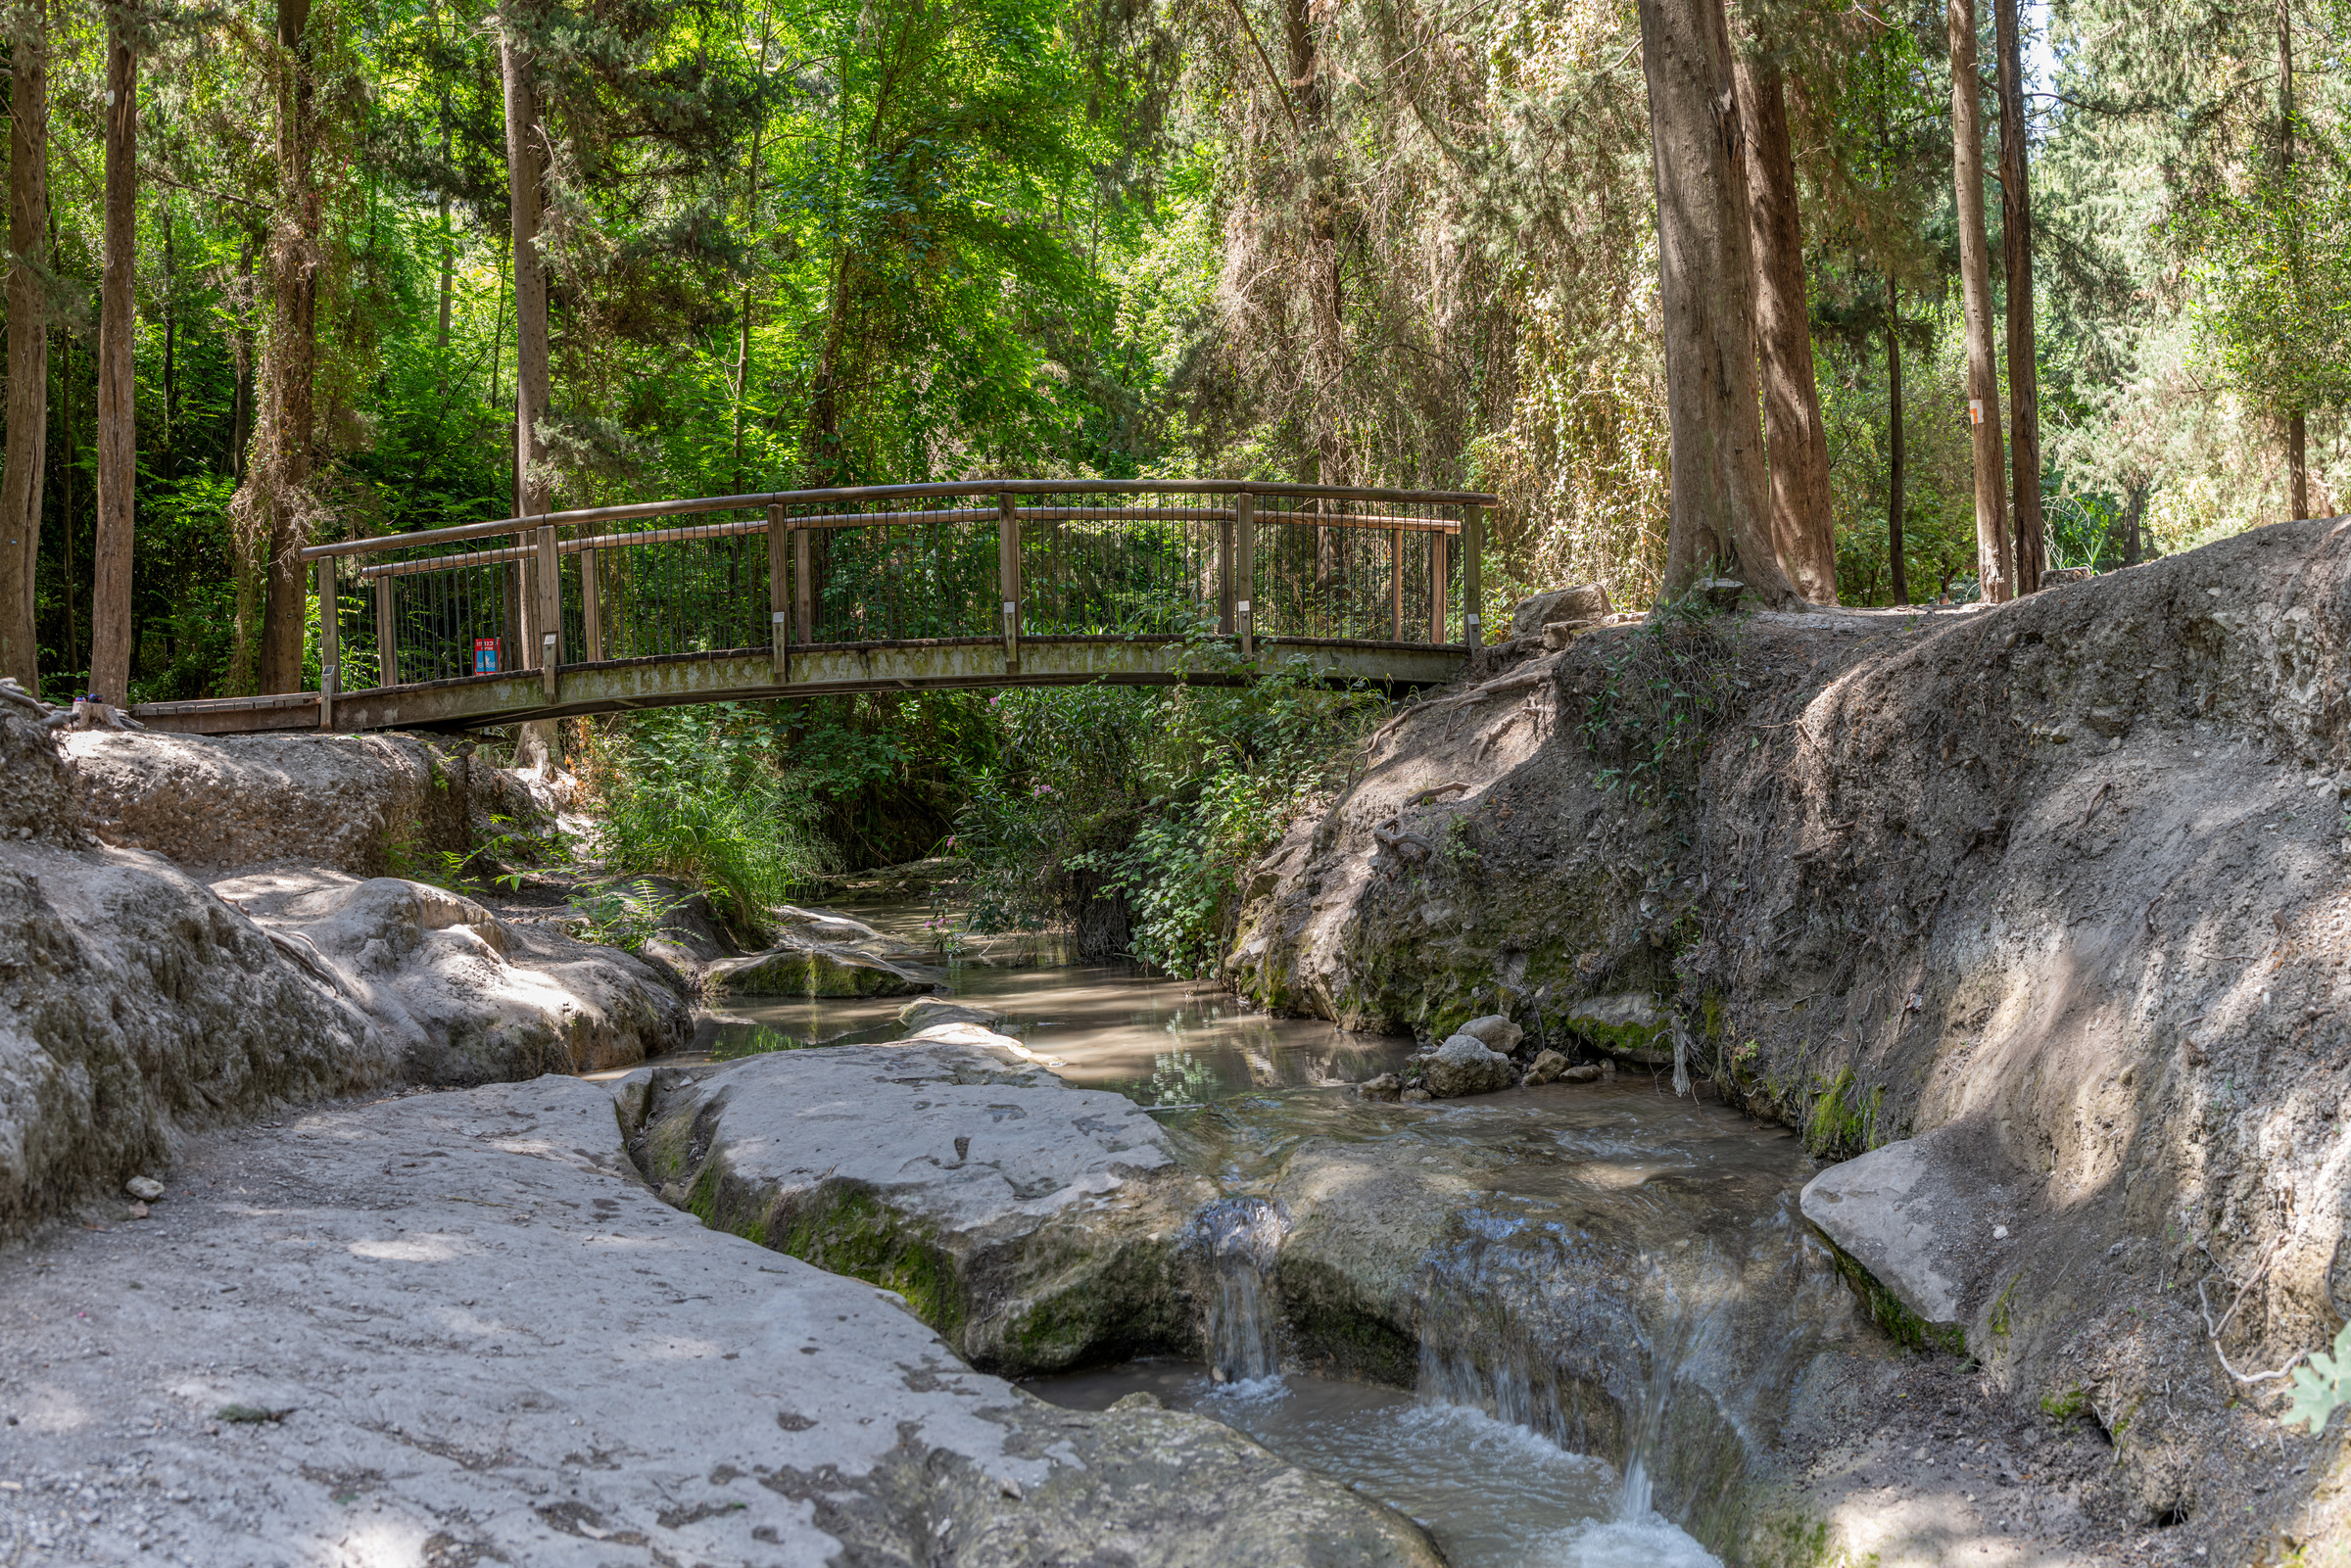 Wooden bridge over Nahal Hashofet stream at Ramot Menashe Forest in Israel